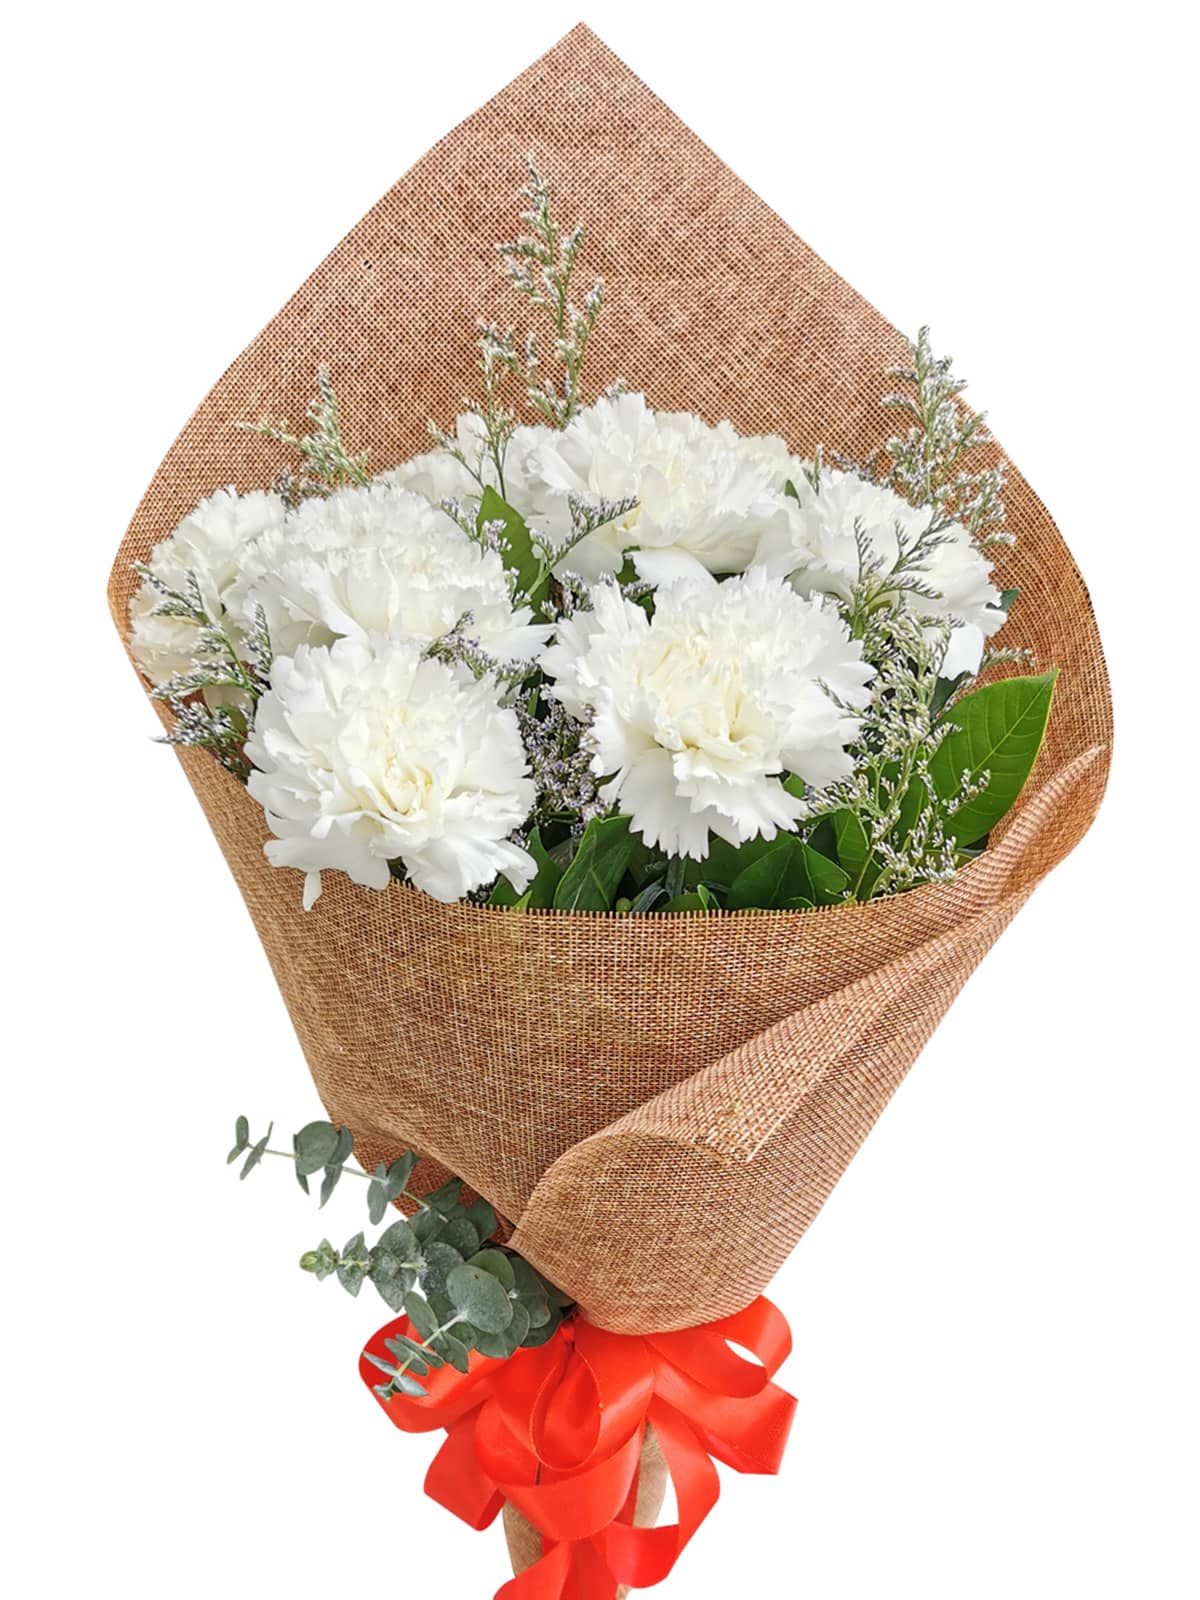 WHITE Carnation Burlap ch